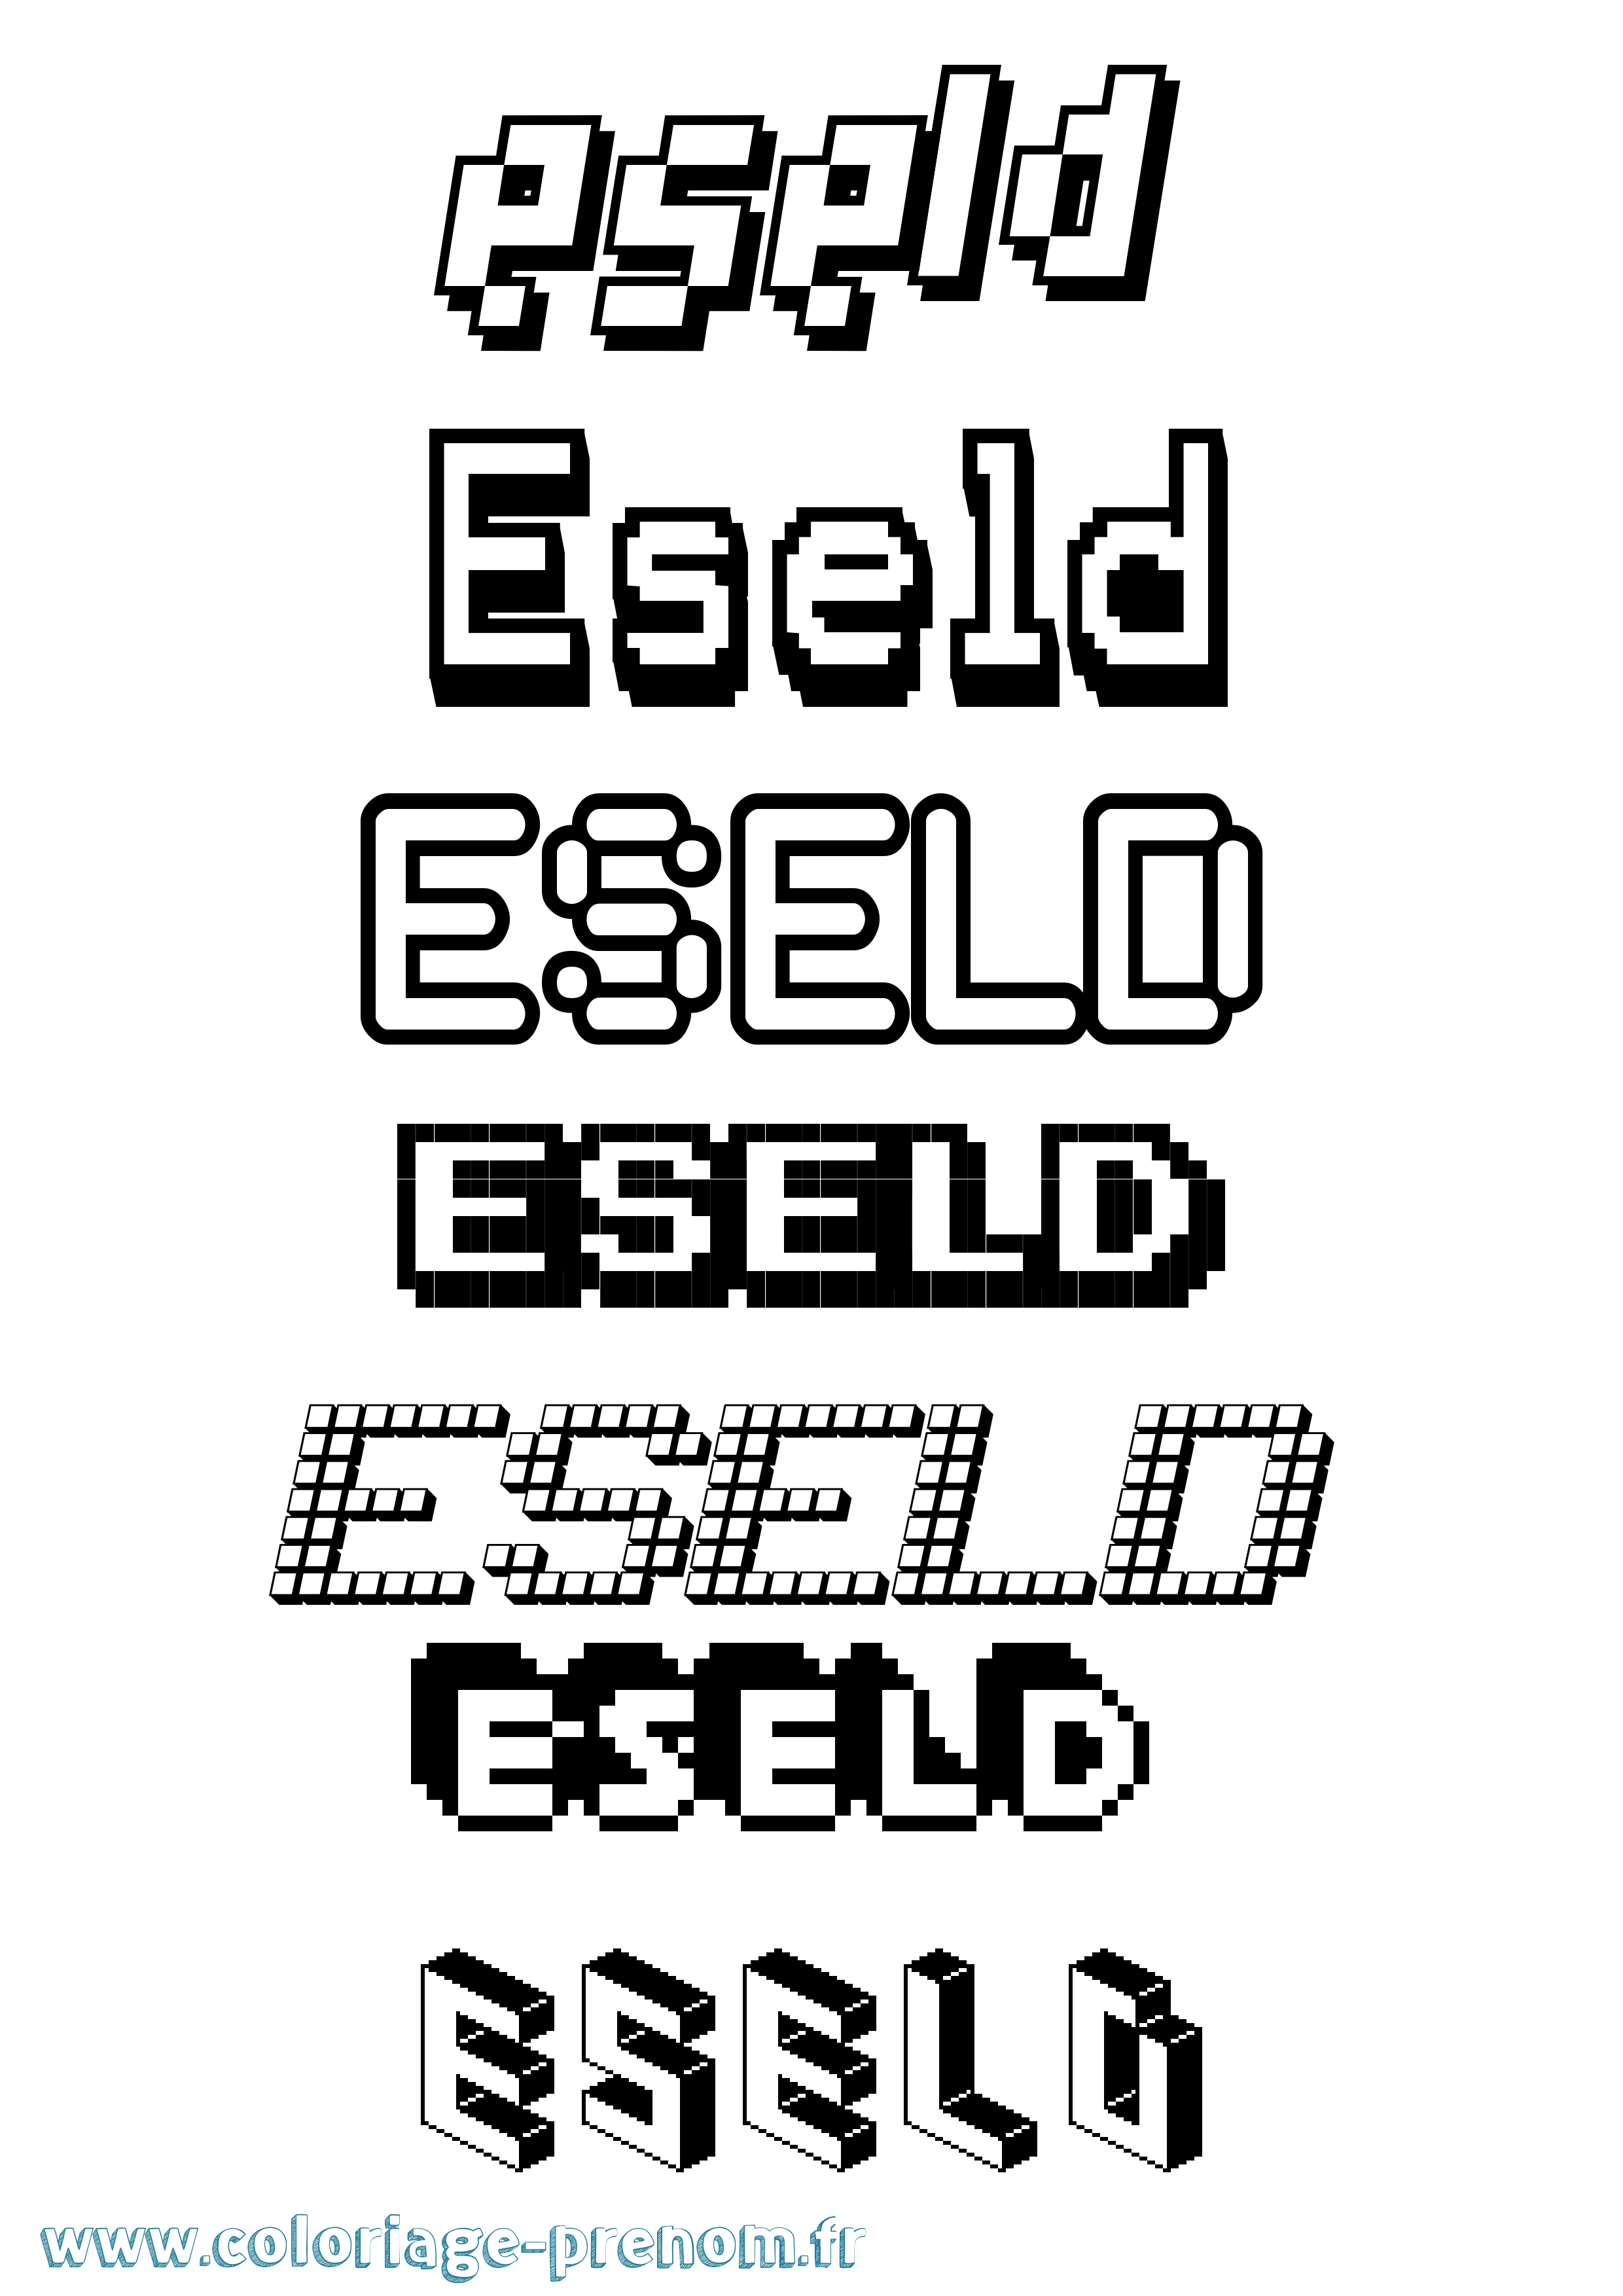 Coloriage prénom Eseld Pixel